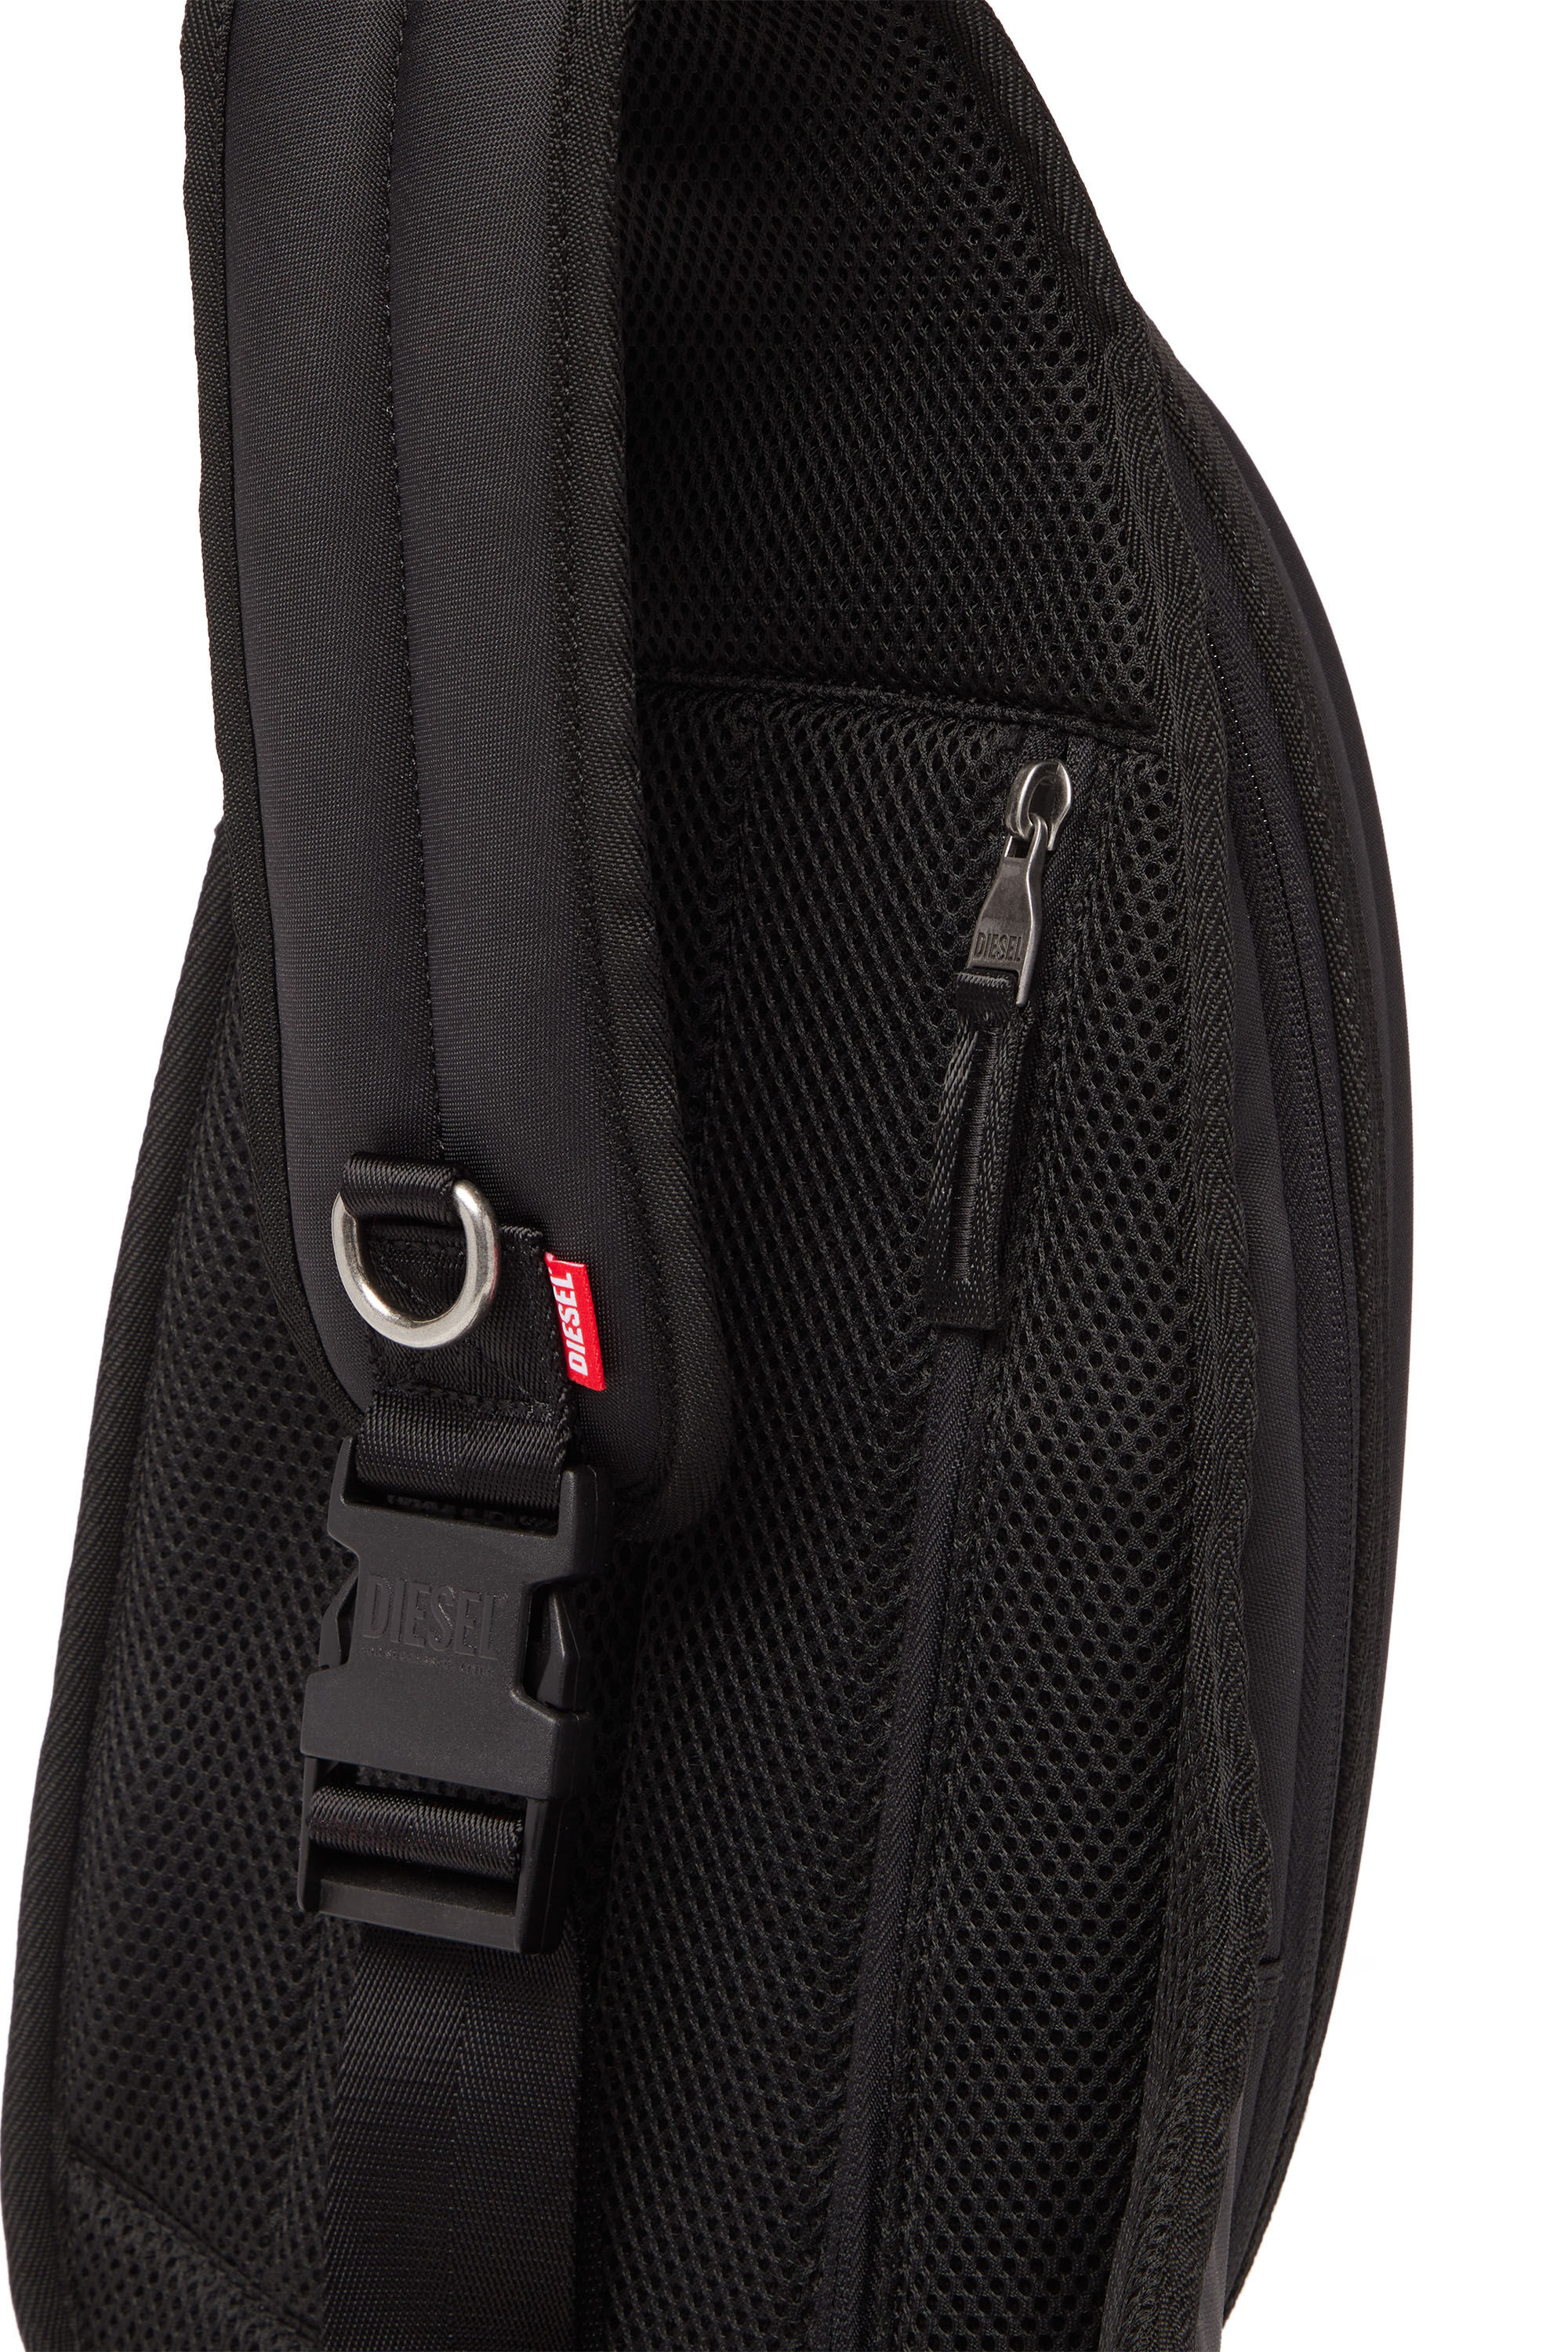 1DR-POD SLING BAG Man: Hard shell sling backpack | Diesel